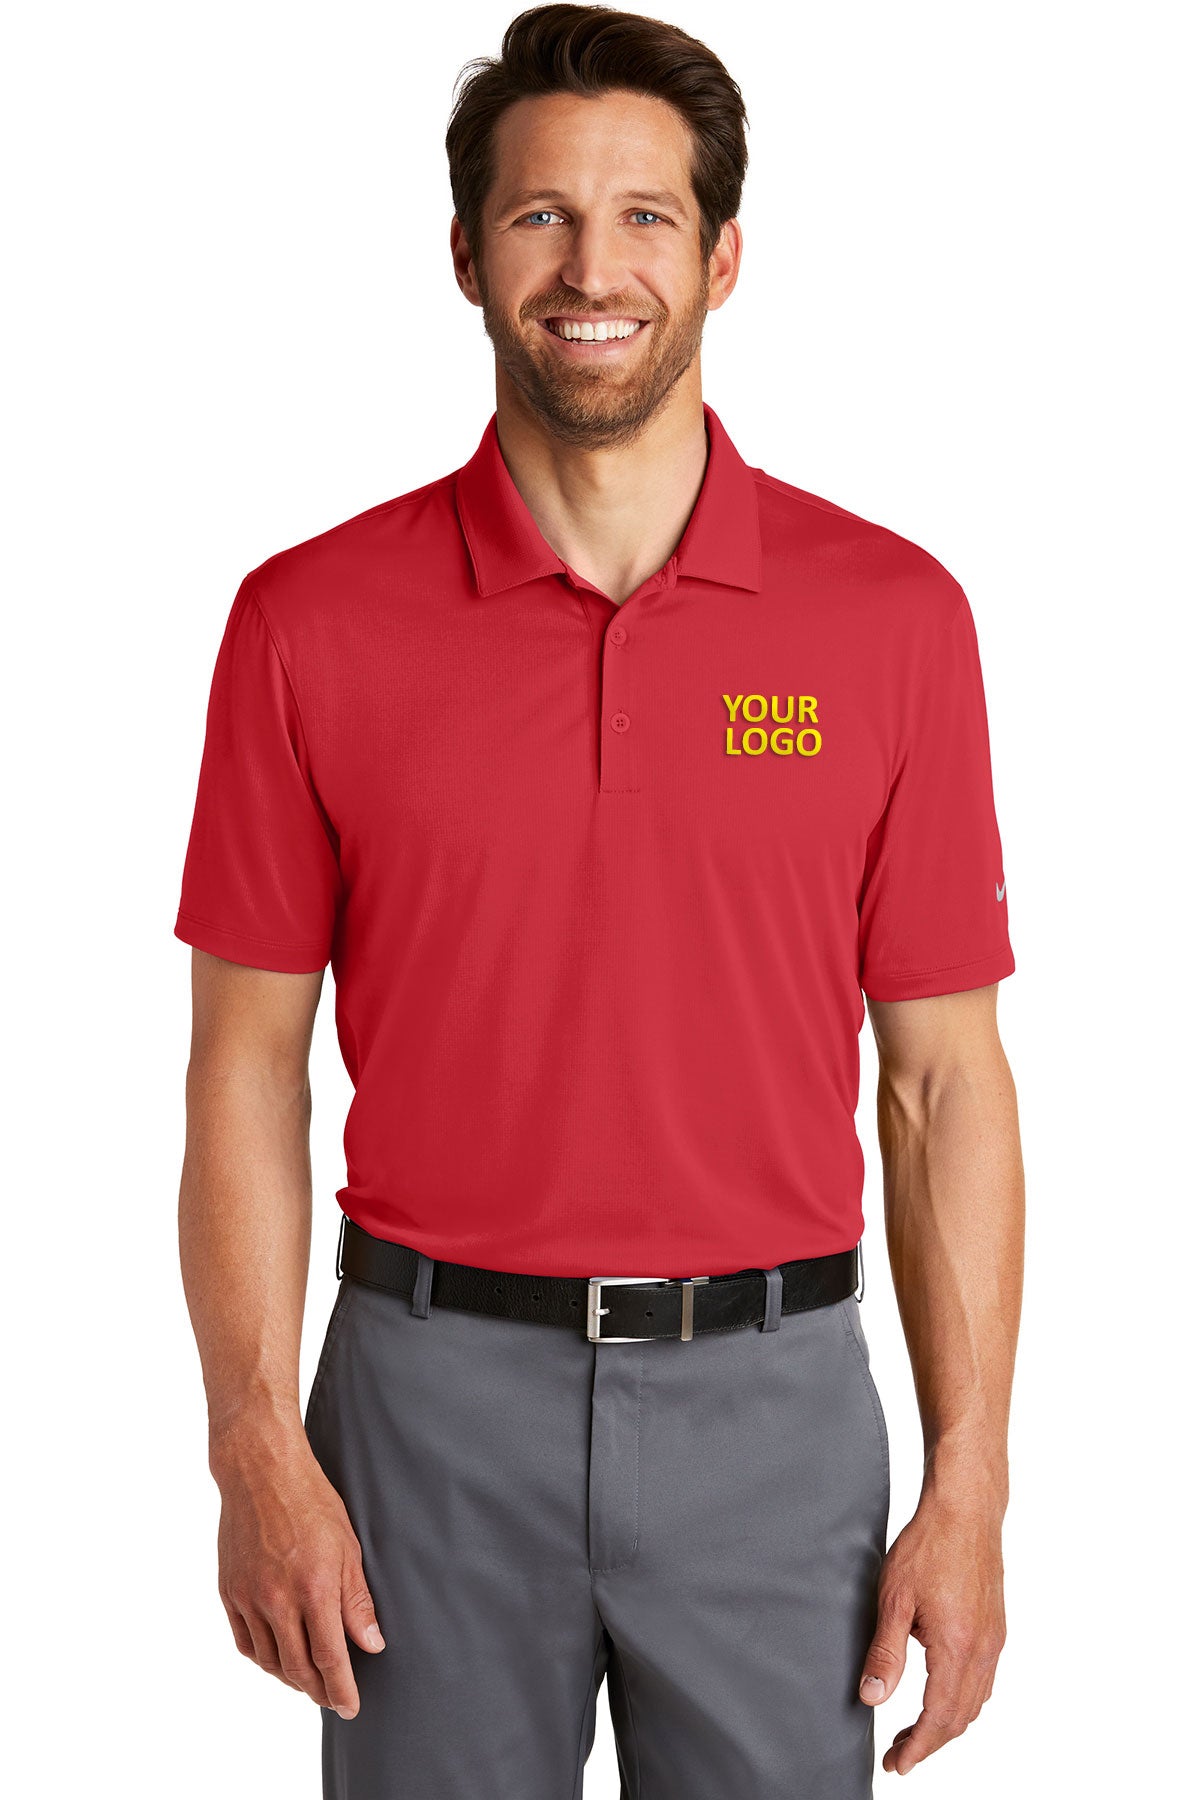 nike gym red 883681 custom made work polo shirts